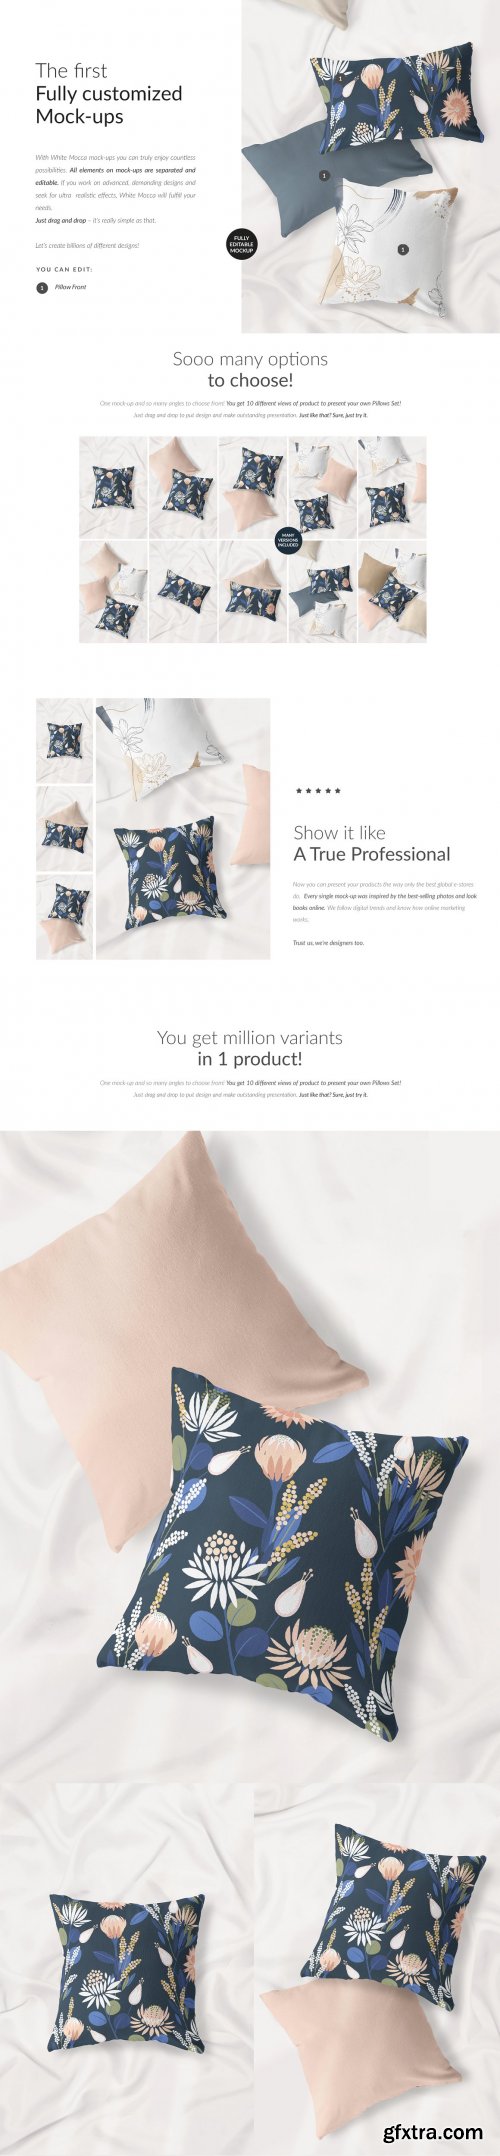 CreativeMarket - The Pillows & Bedsheet 2 Mock-ups 6133197